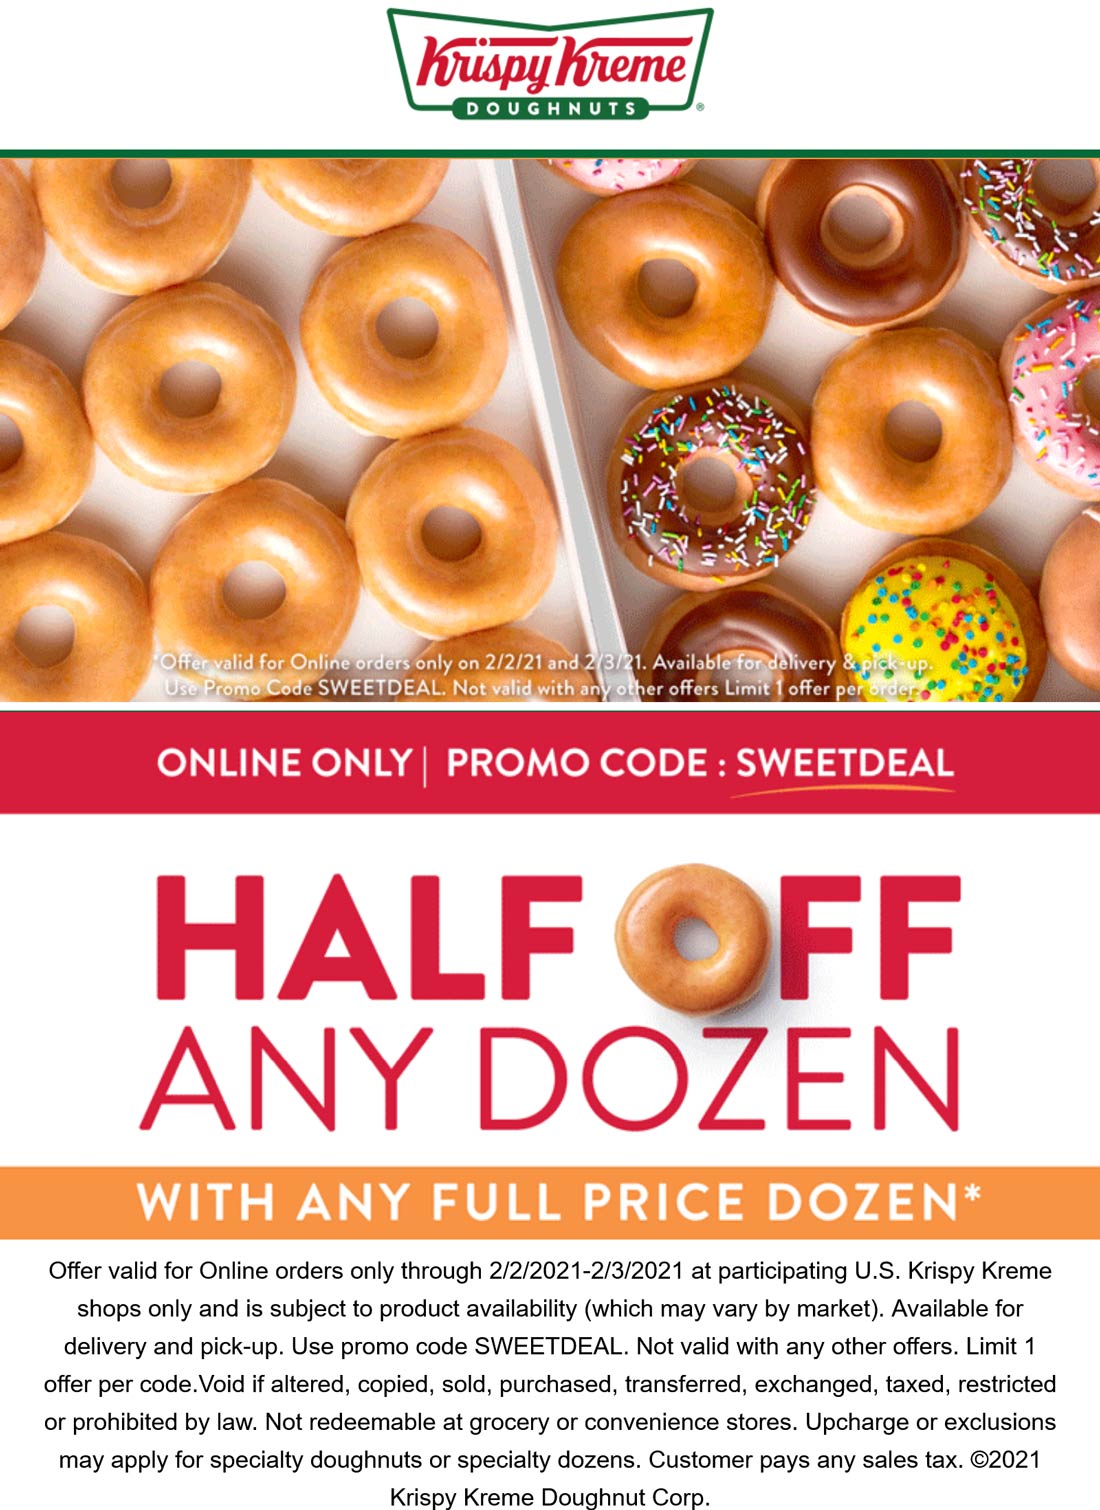 Second dozen 50 off at Krispy Kreme doughnuts via promo code SWEETDEAL